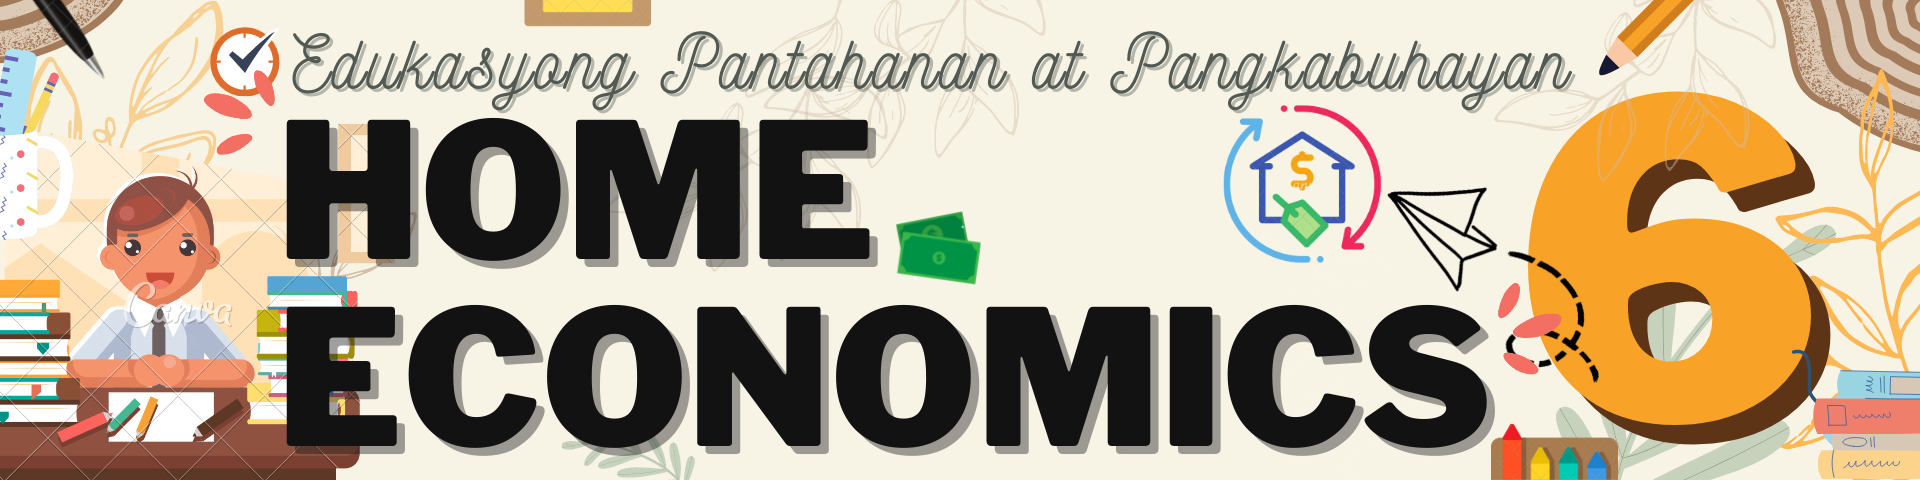 G6 - Edukasyong Pantahanan at Pangkabuhayan - Home Economics  - Filipos